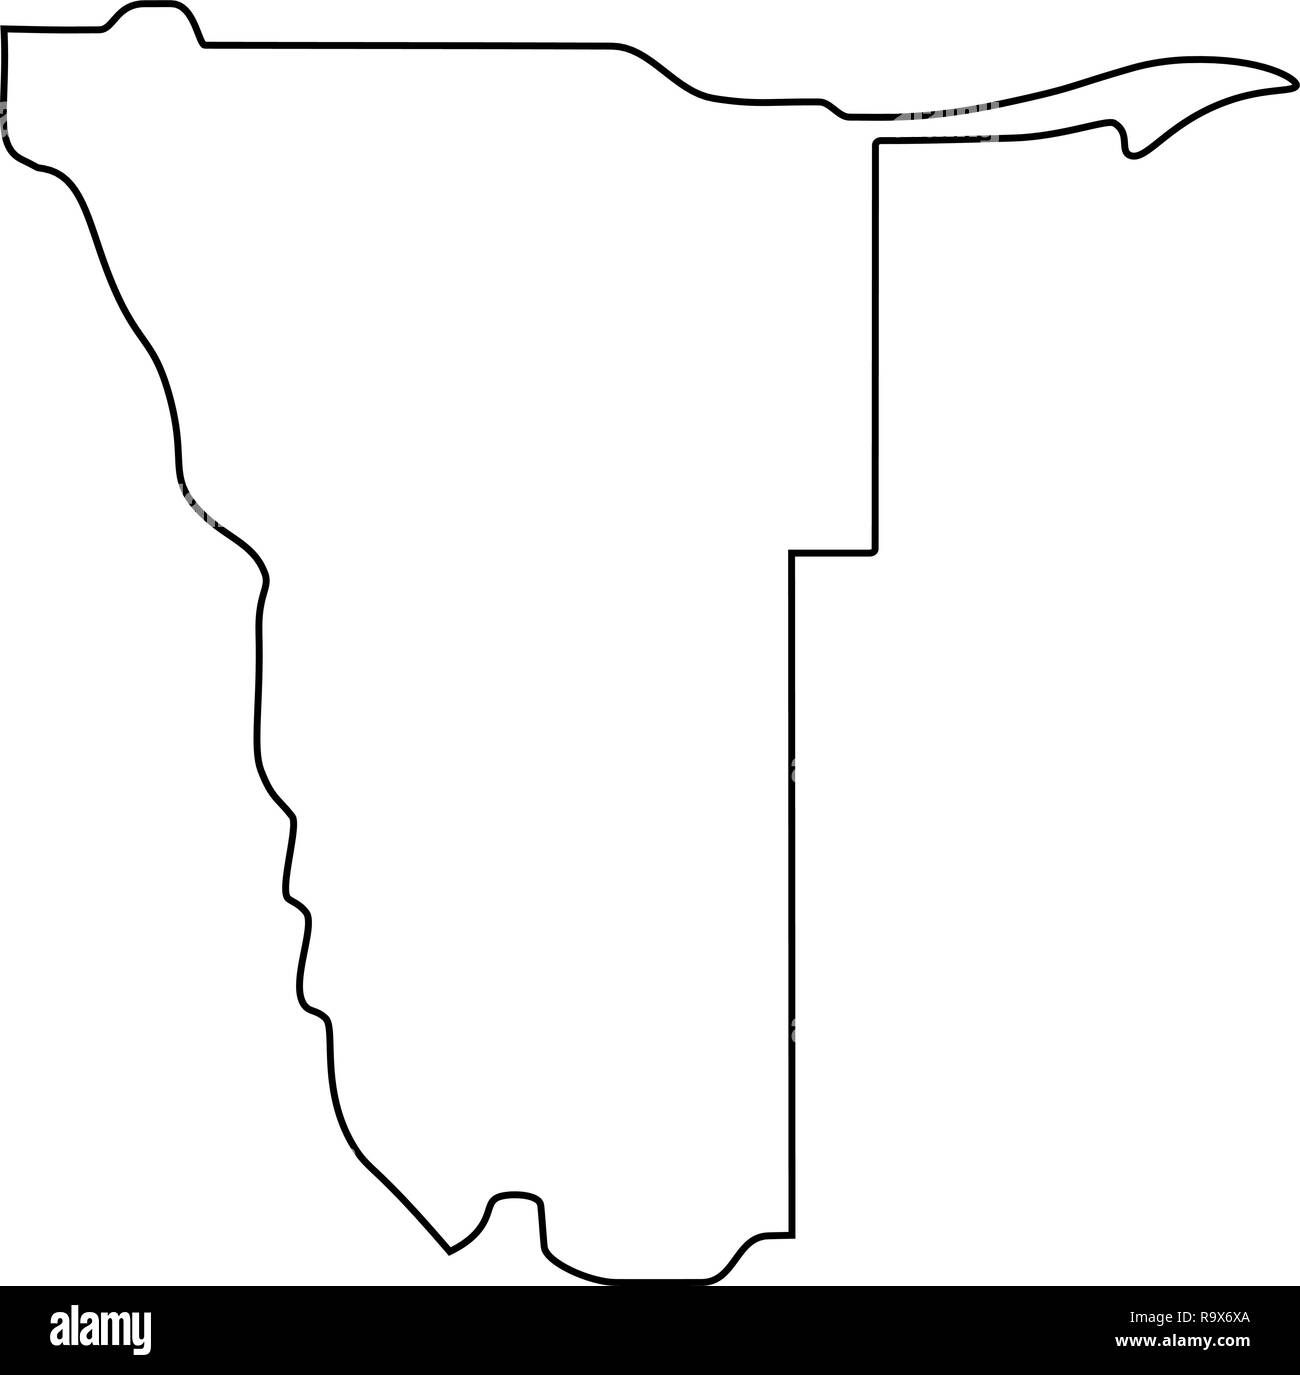 Karte von Namibia - skizzieren. Silhouette von Namibia Karte Vector Illustration Stock Vektor